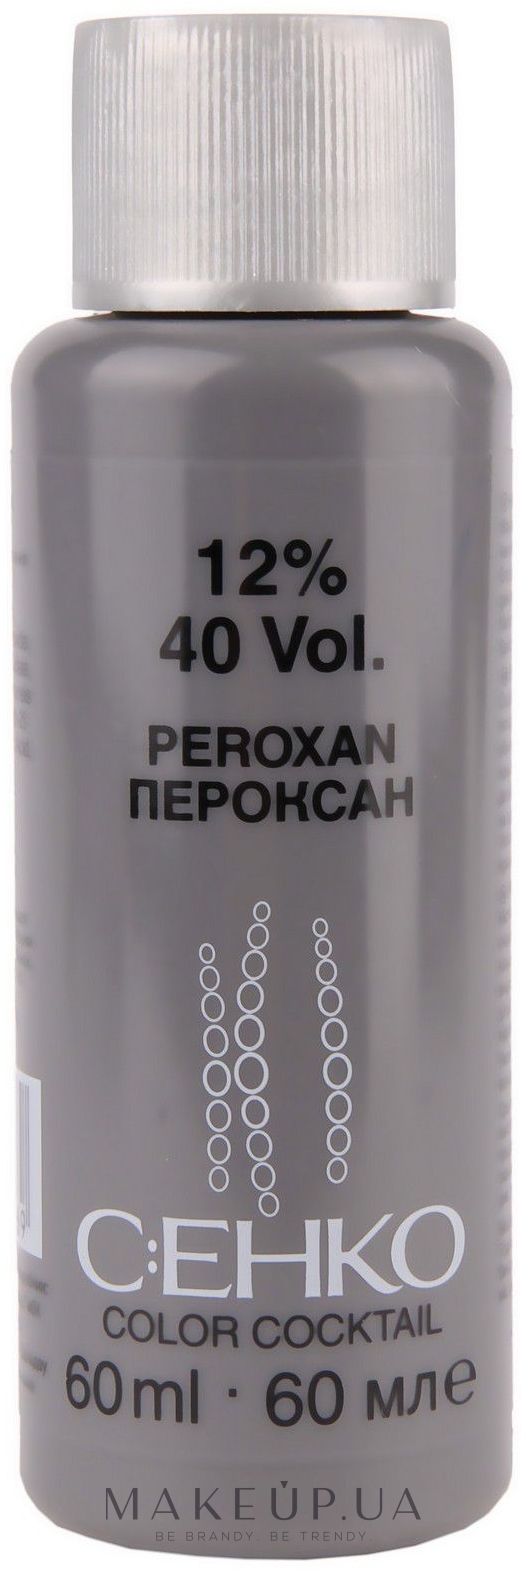 Оксидант - C:EHKO Color Cocktail Peroxan 12% 40Vol. — фото 60ml